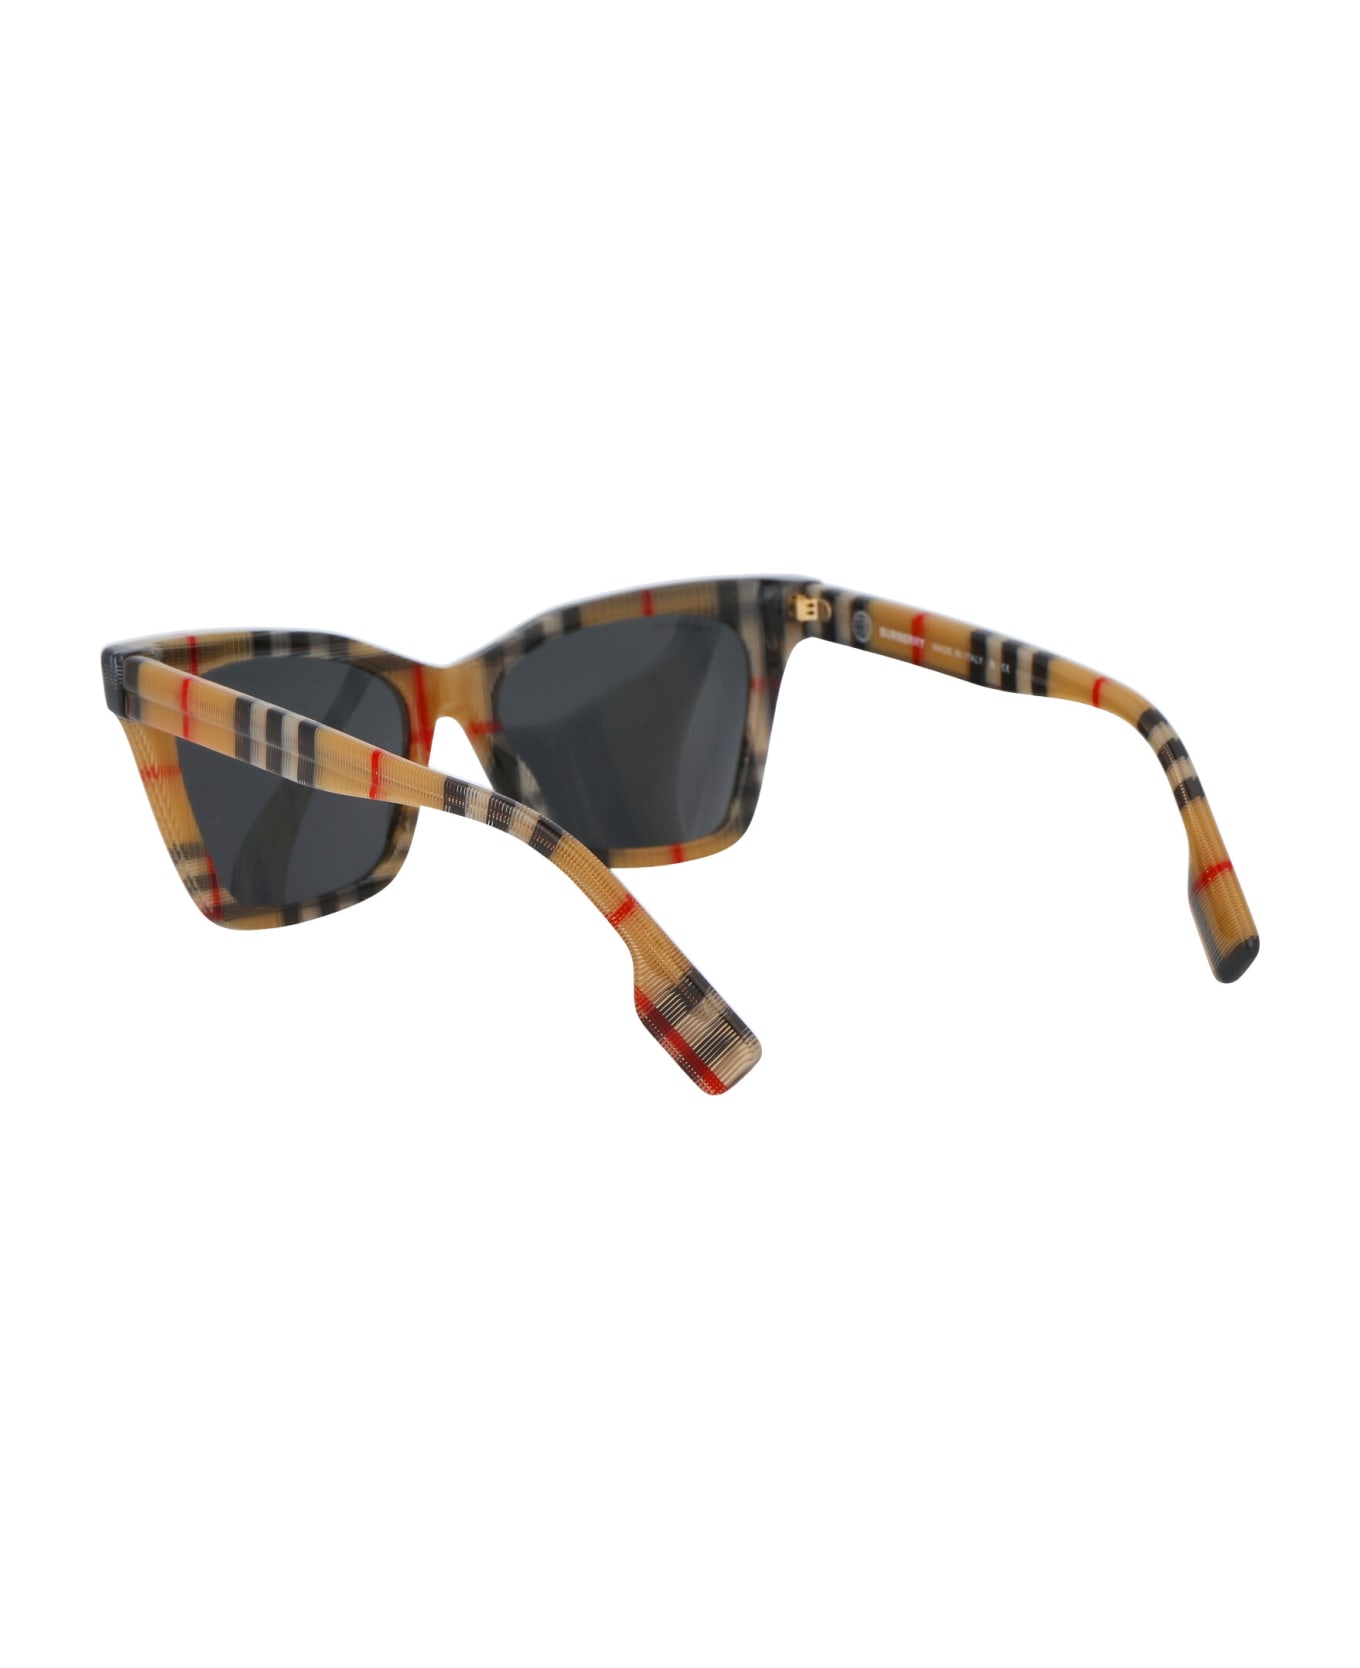 Burberry Eyewear Elsa Sunglasses - 394487 VINTAGE CHECK